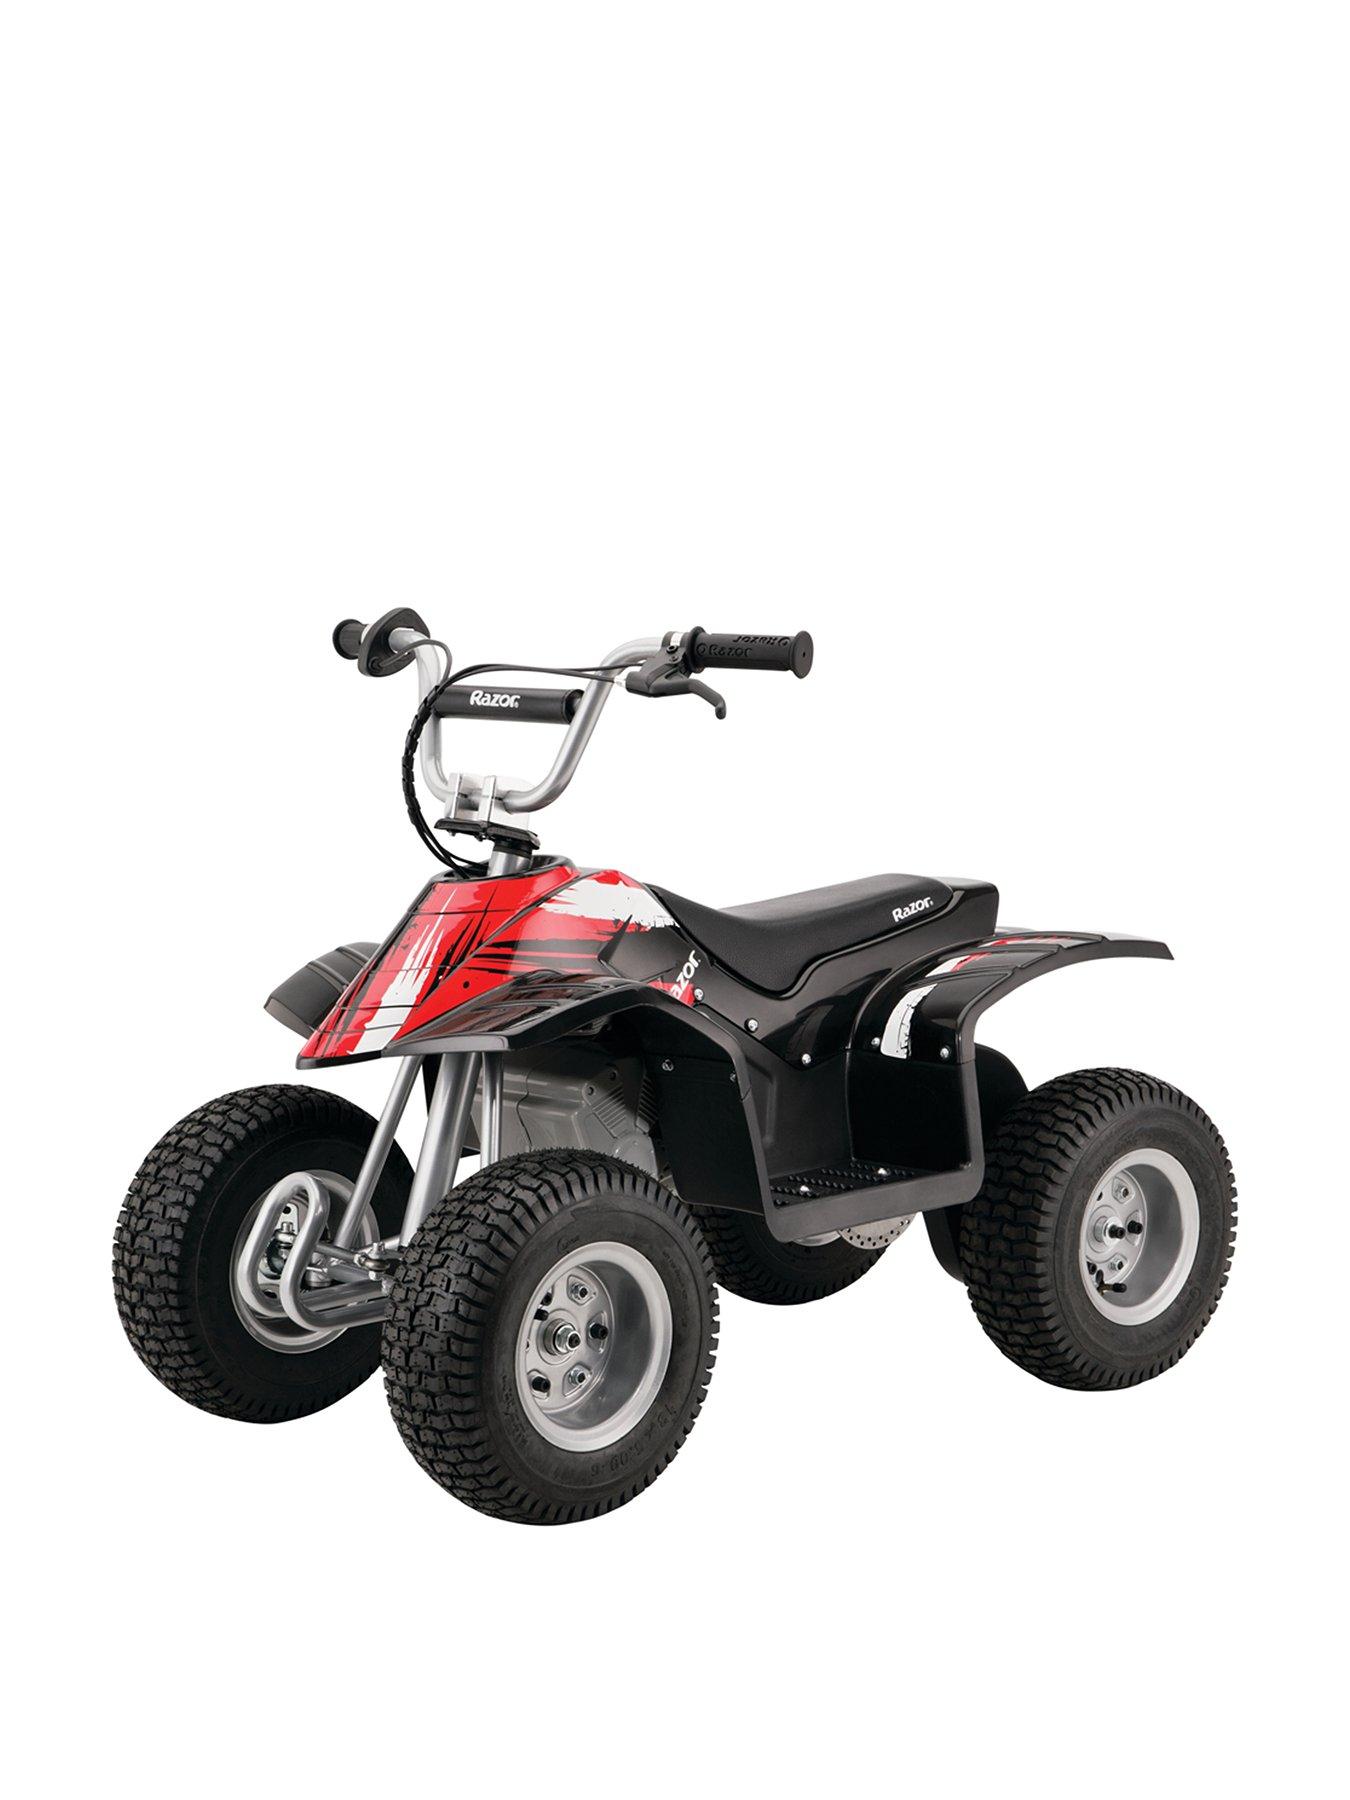 Razor Dirt Quad - Electric Quad Bike, Atv For Kids 8+ - Red